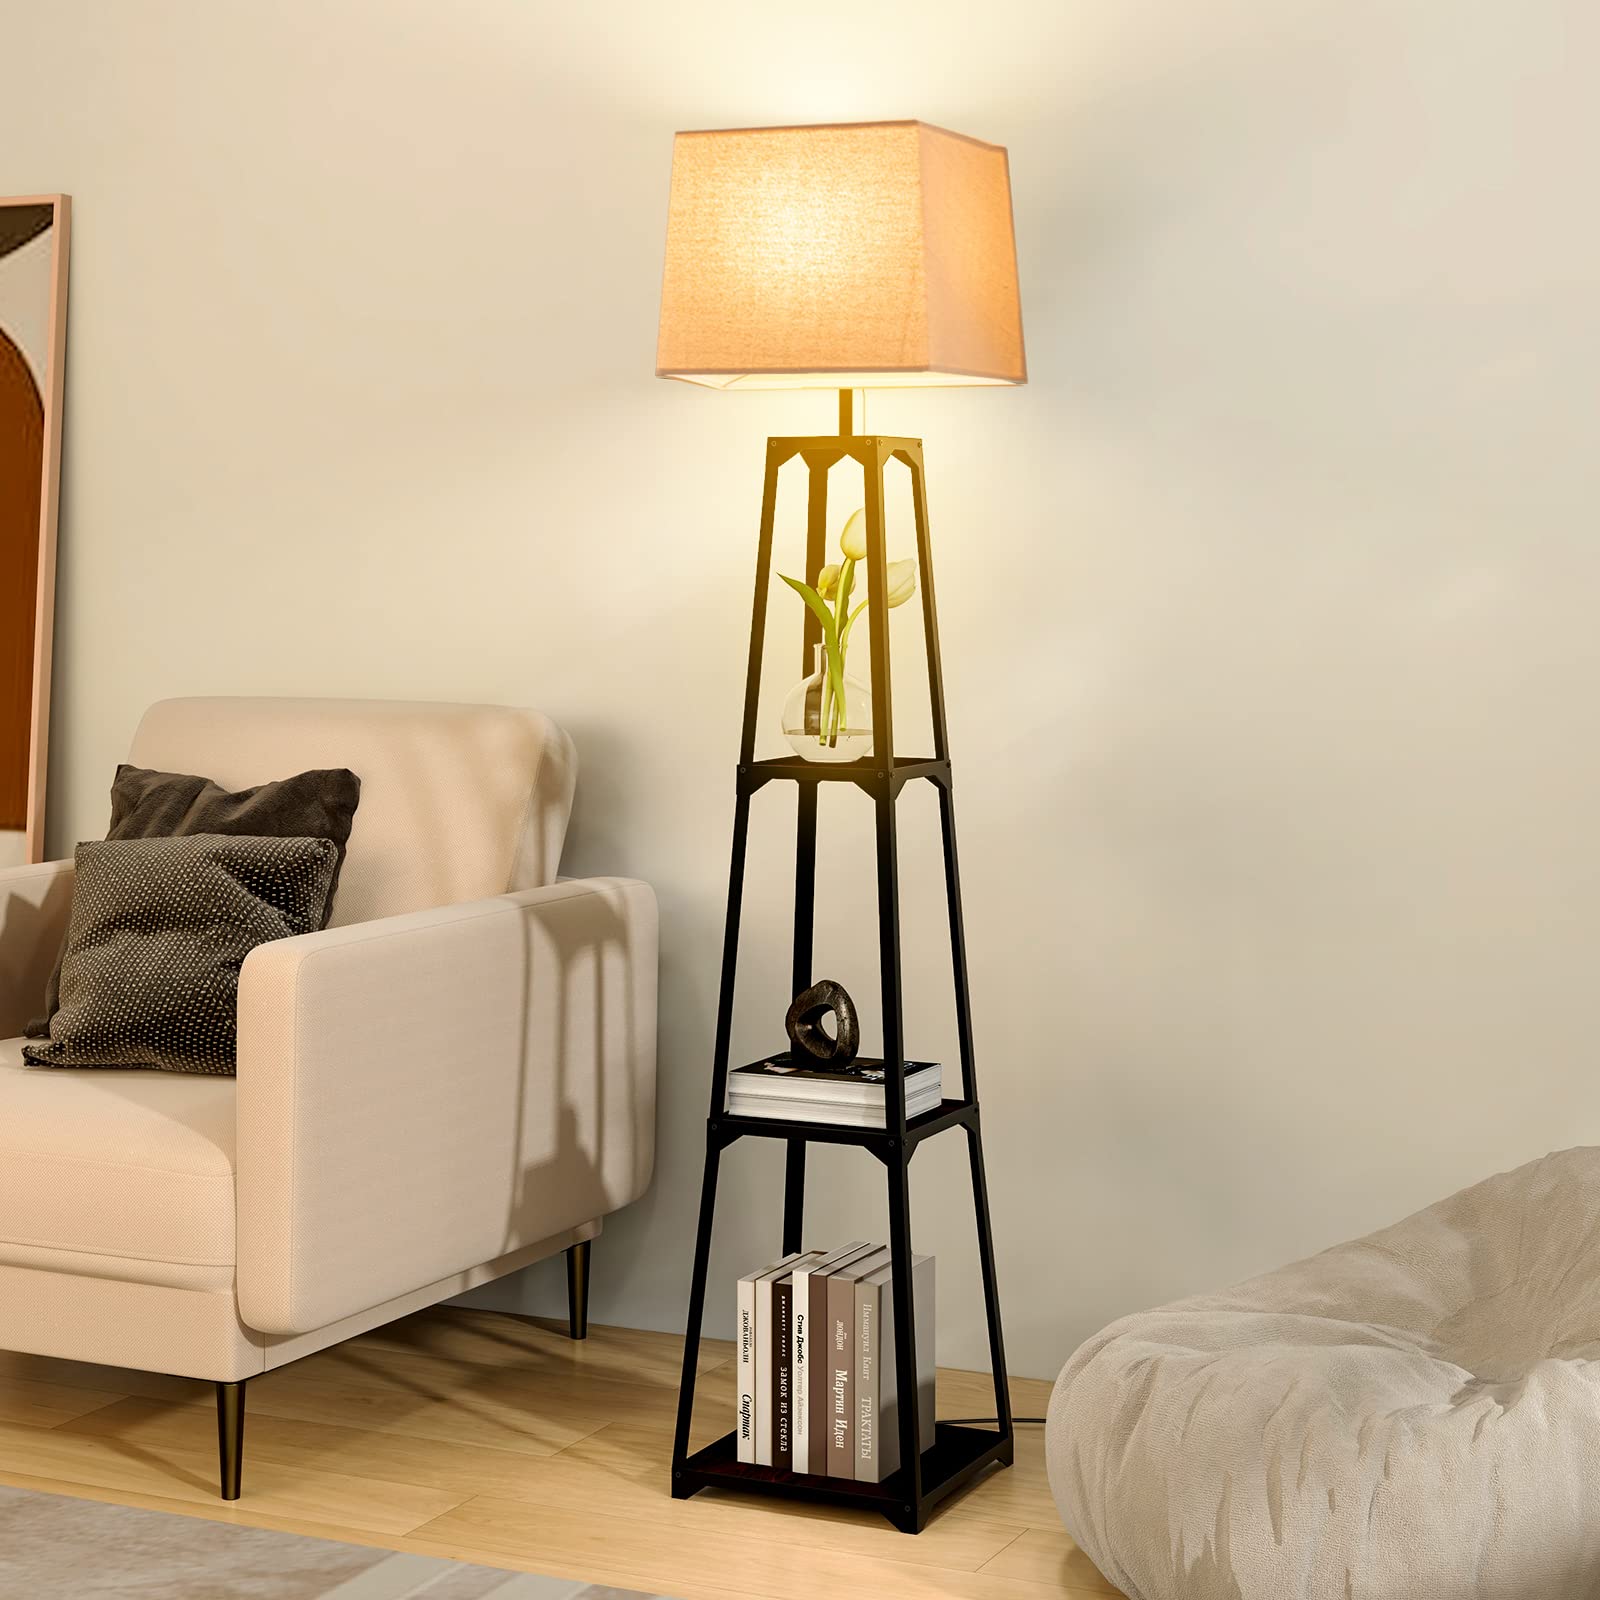 Giantex Shelf Floor Lamp - 3-Tier 63" Tall Modern Corner Standing Lamp with Linen Lampshade